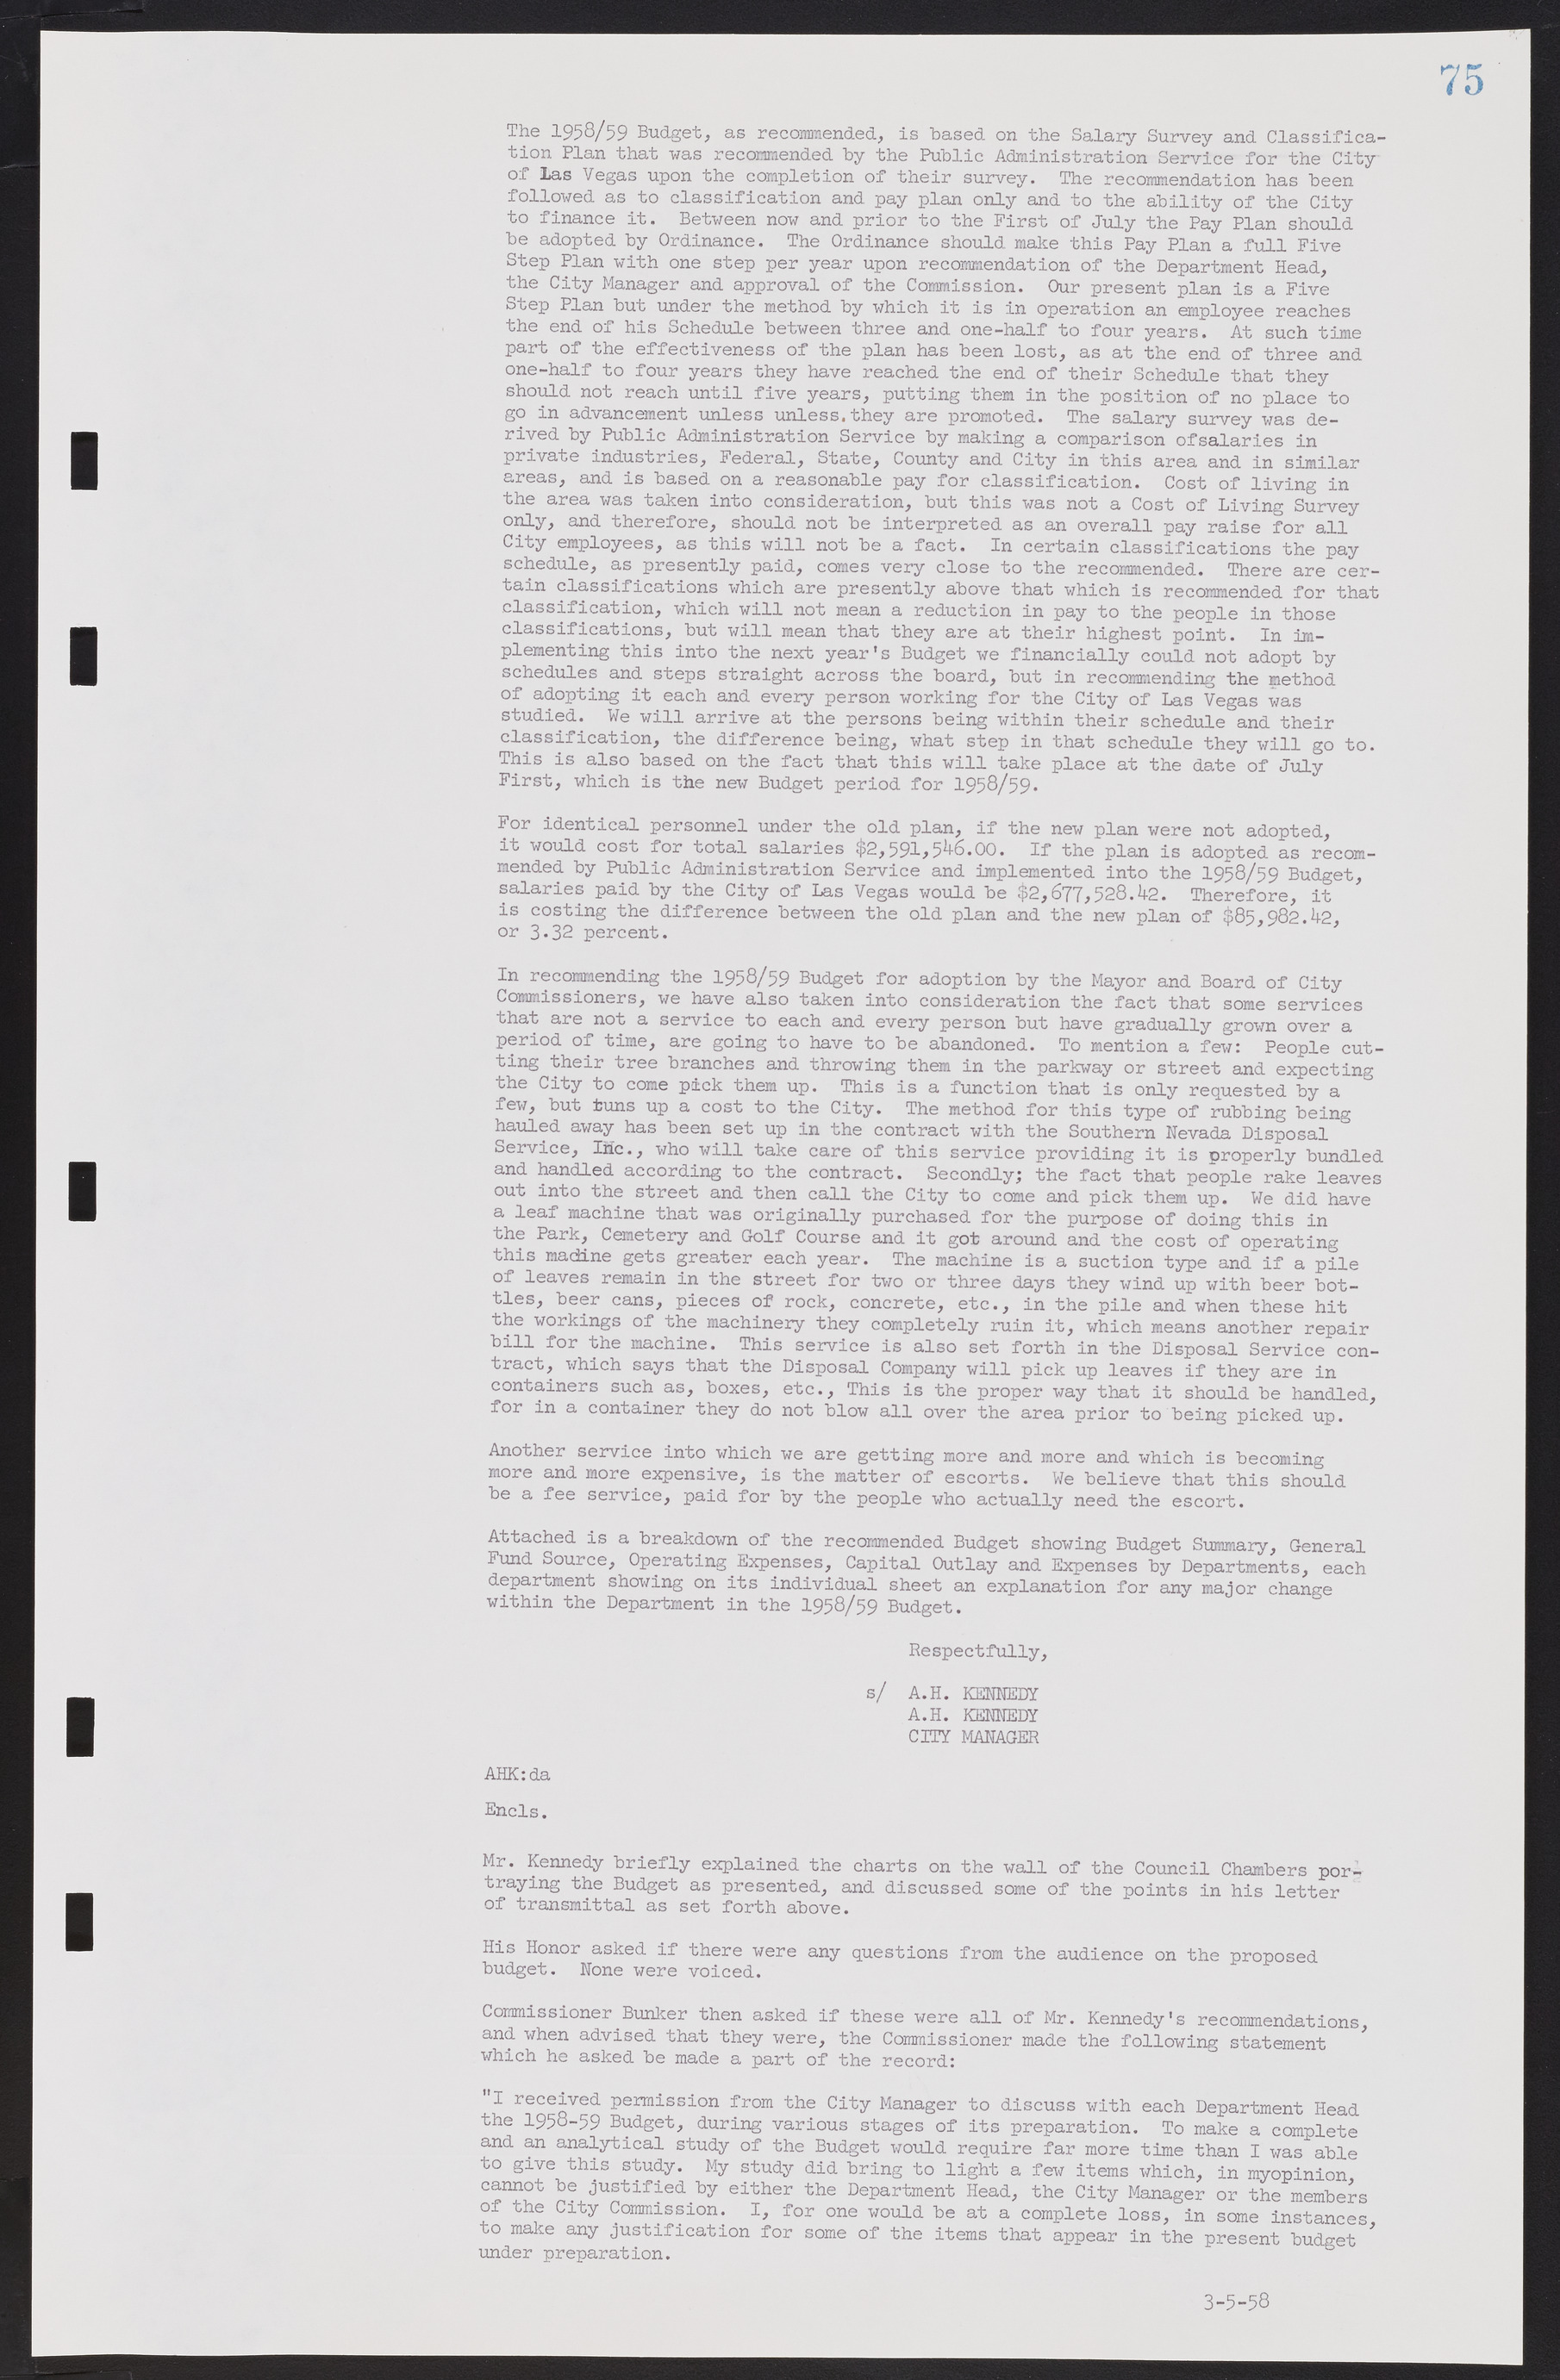 Las Vegas City Commission Minutes, November 20, 1957 to December 2, 1959, lvc000011-79